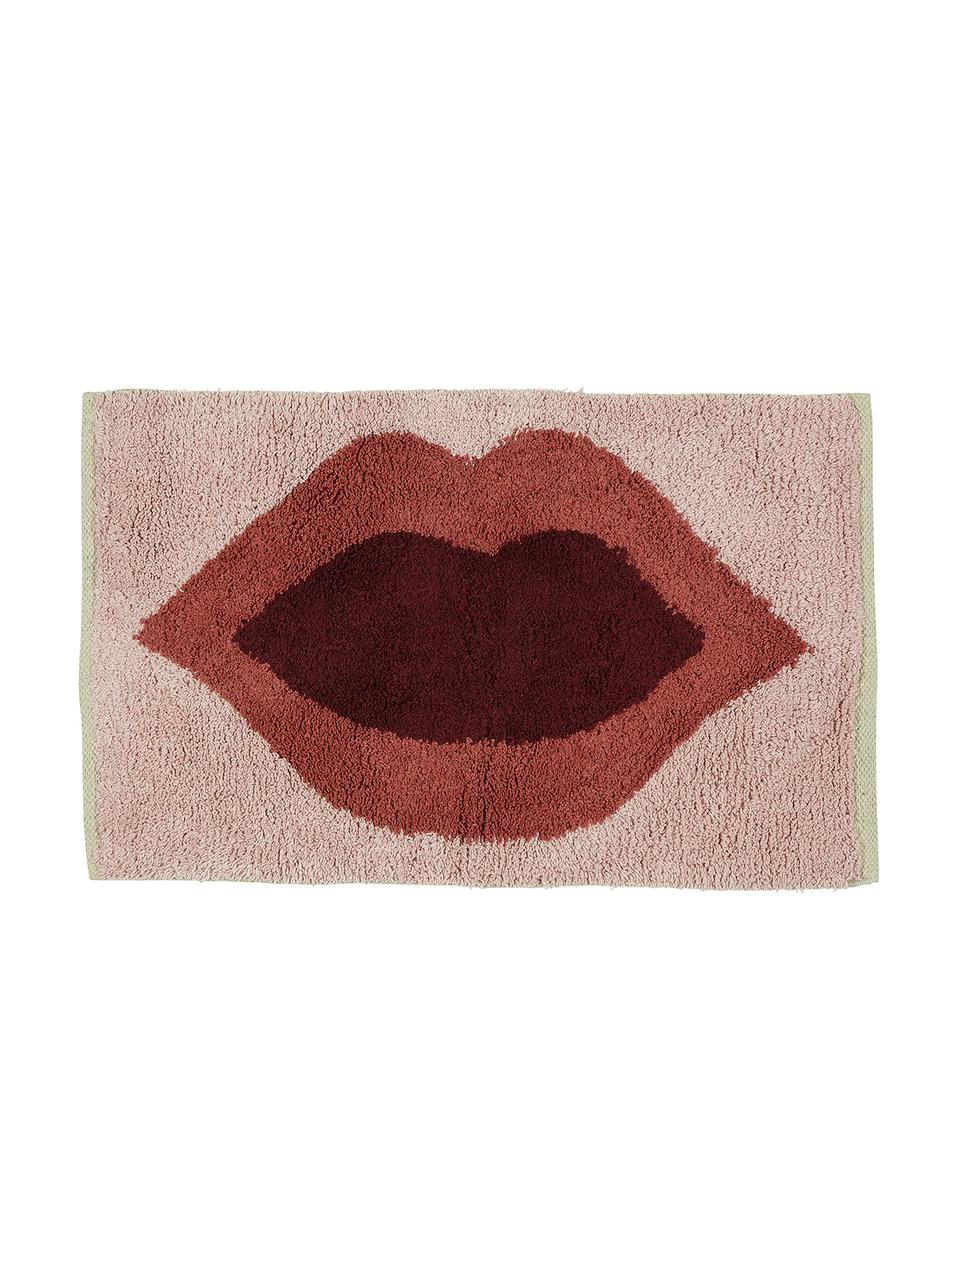 Badmat Kiss, 100% katoen
Niet antislip, Roze, rood, donkerrood, B 60 x L 90 cm